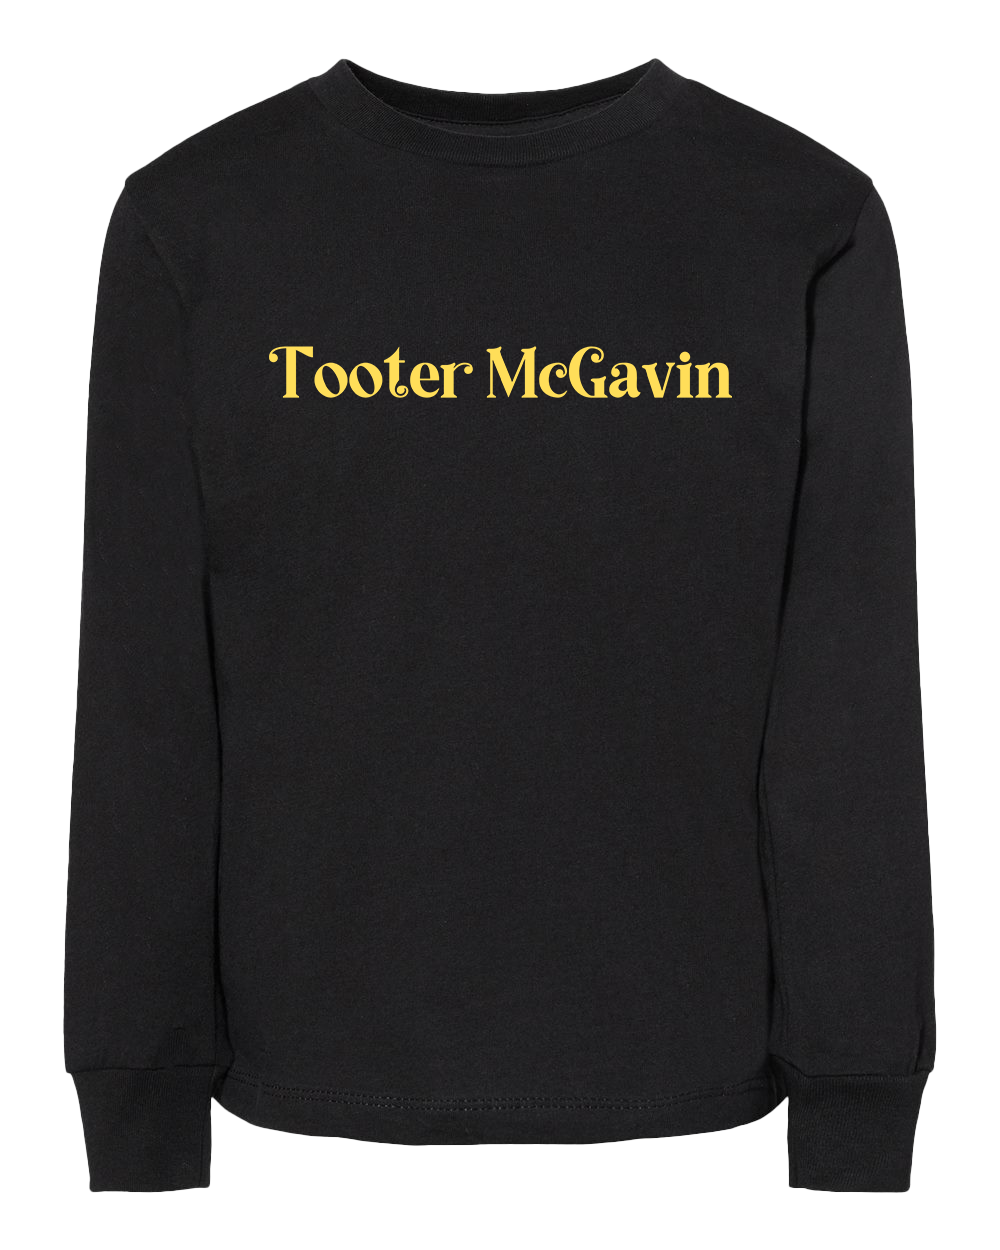 Toddler Tooter McGavin Long Sleeve Tshirt - Black